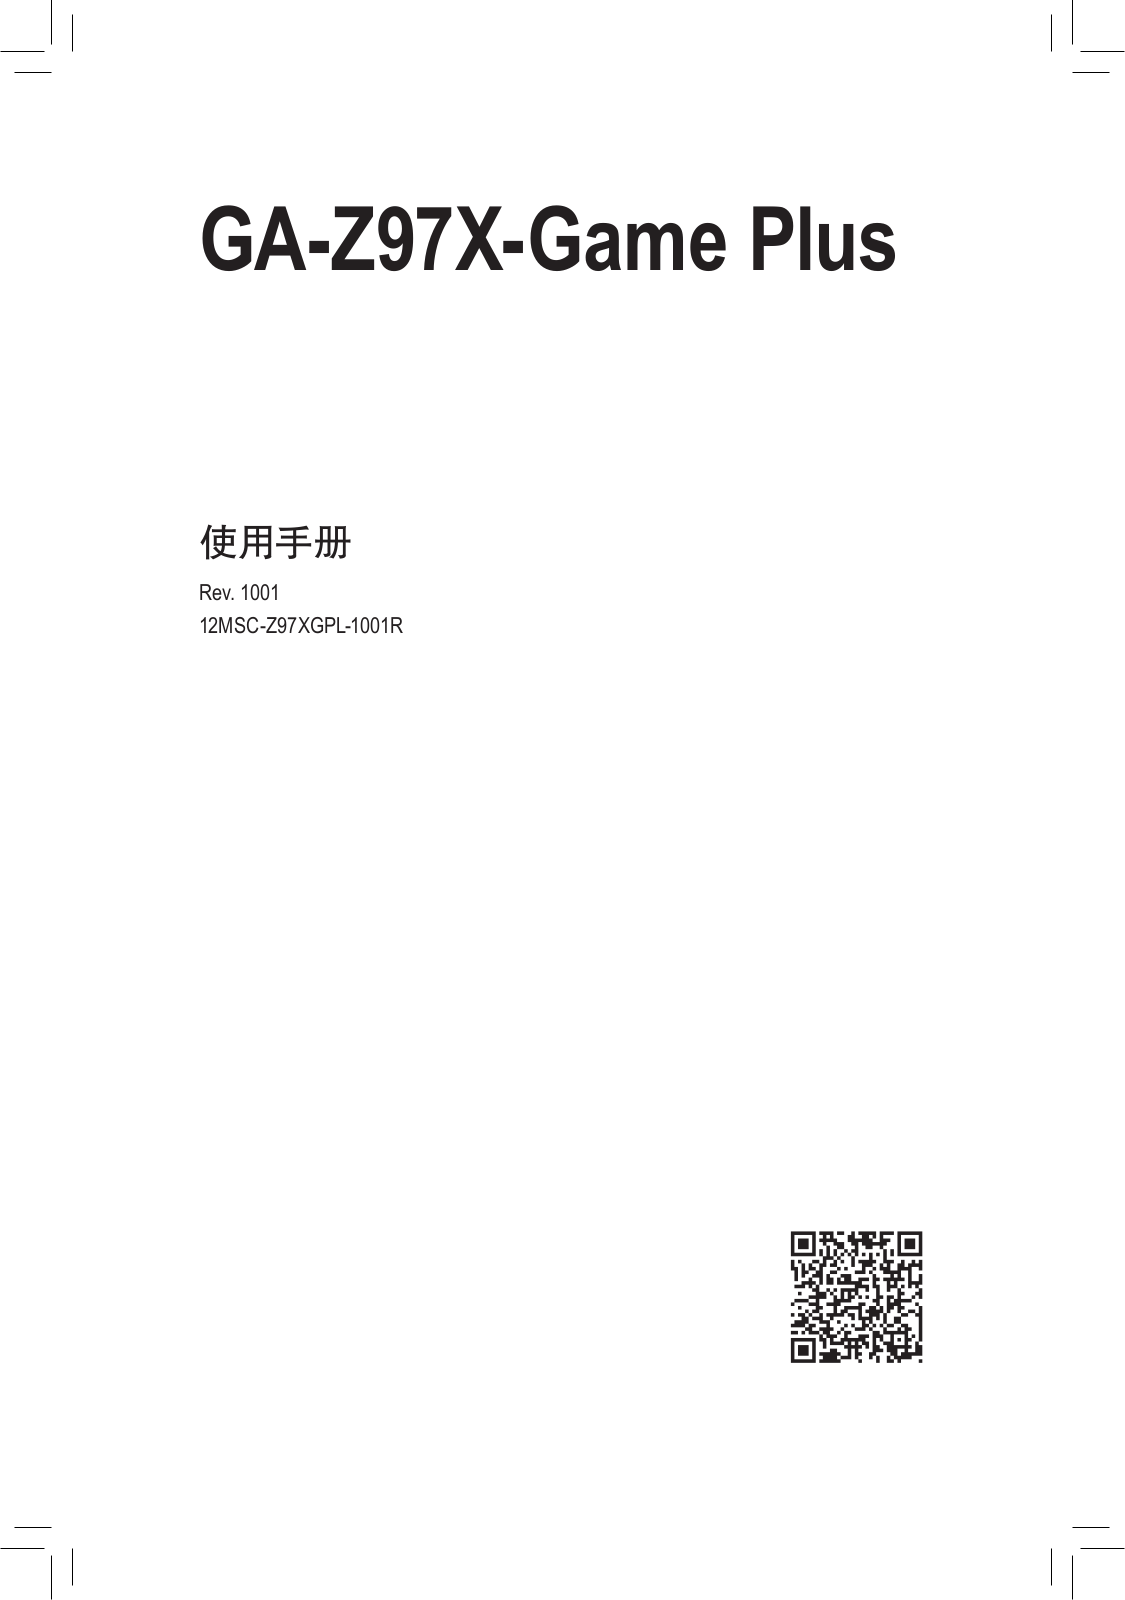 Gigabyte GA-Z97X-GAME PLUS Manual